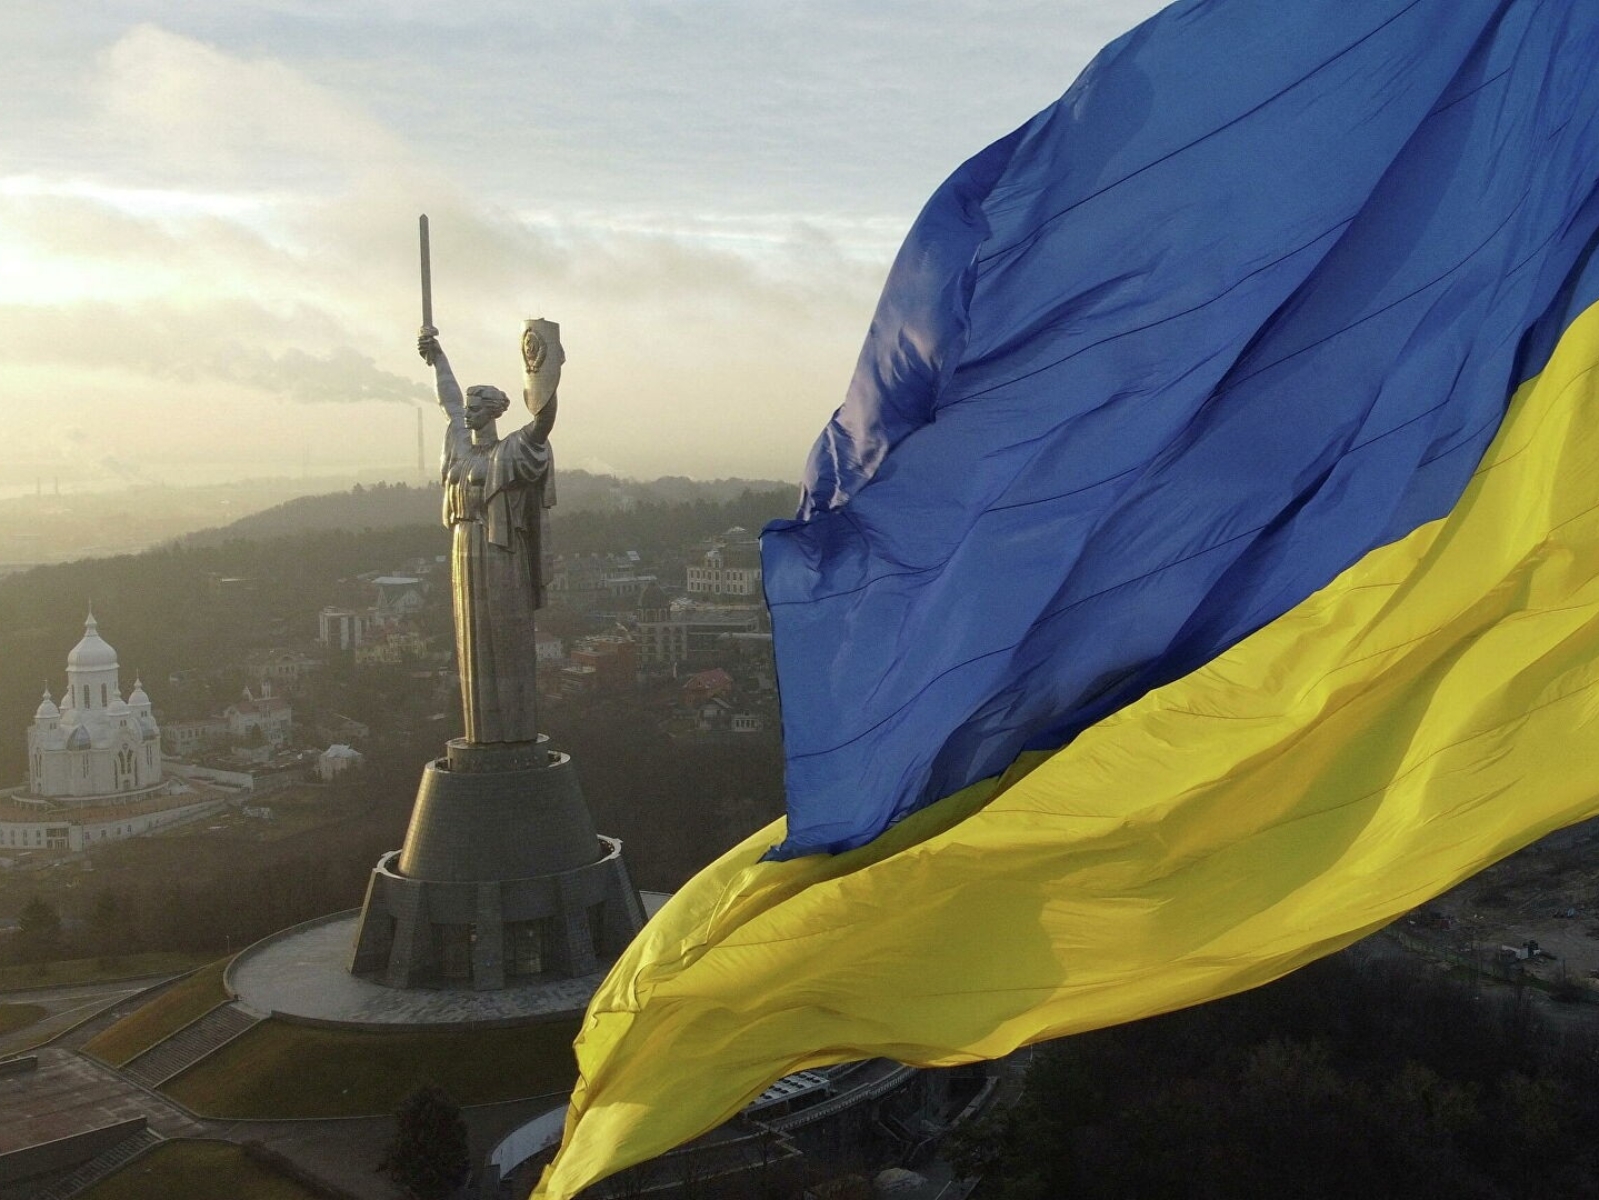 【J 個有意思】盤點烏克蘭必知的 10 件事， 不僅有喜劇演員總統、竟然還曾經是軍事大國！